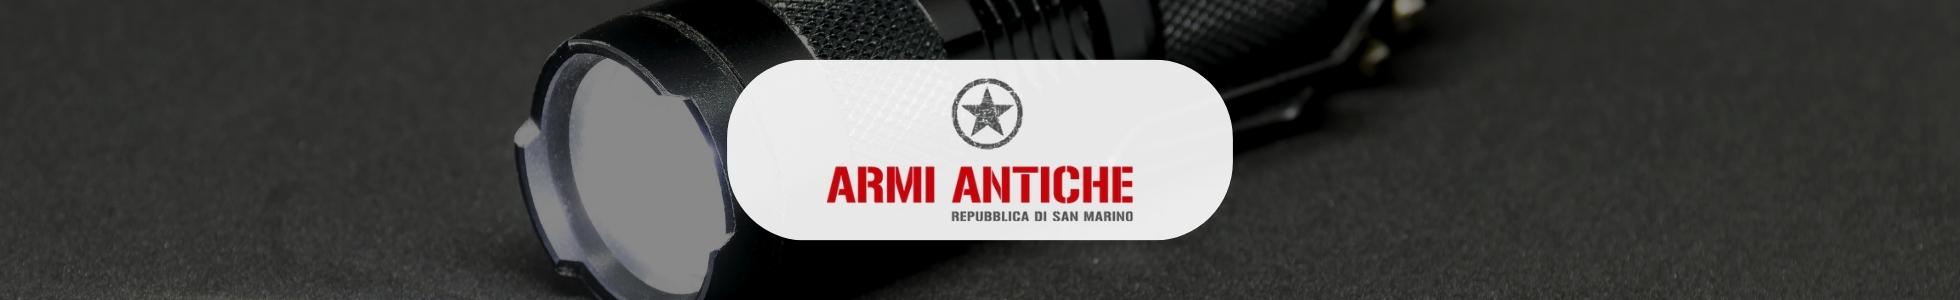 Armi Antiche San Marino - shop online torce LED